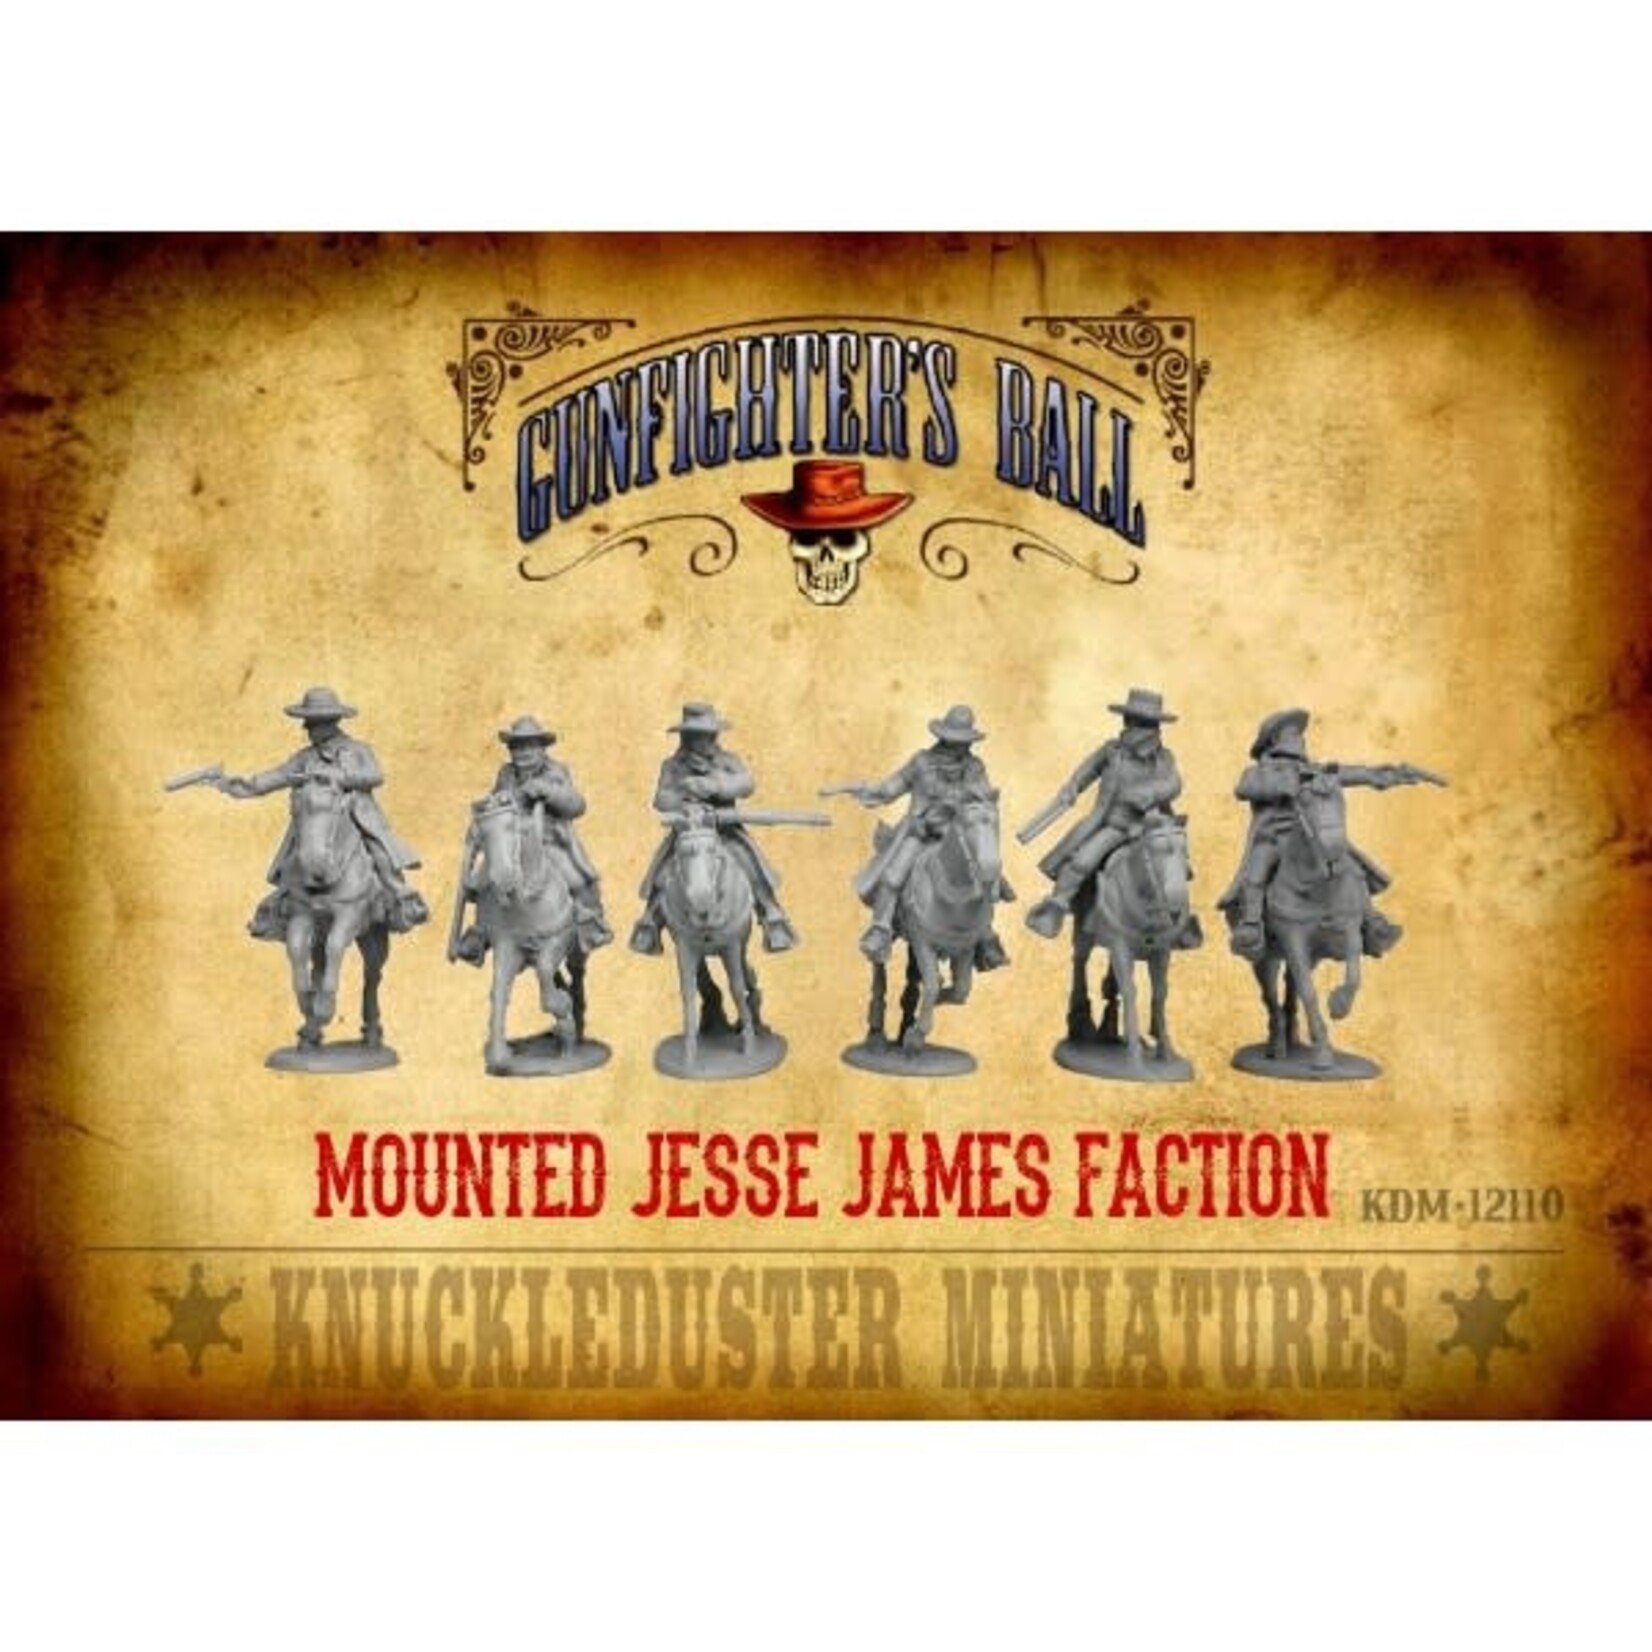 Knuckleduster Miniatures Jesse James Faction Mounted